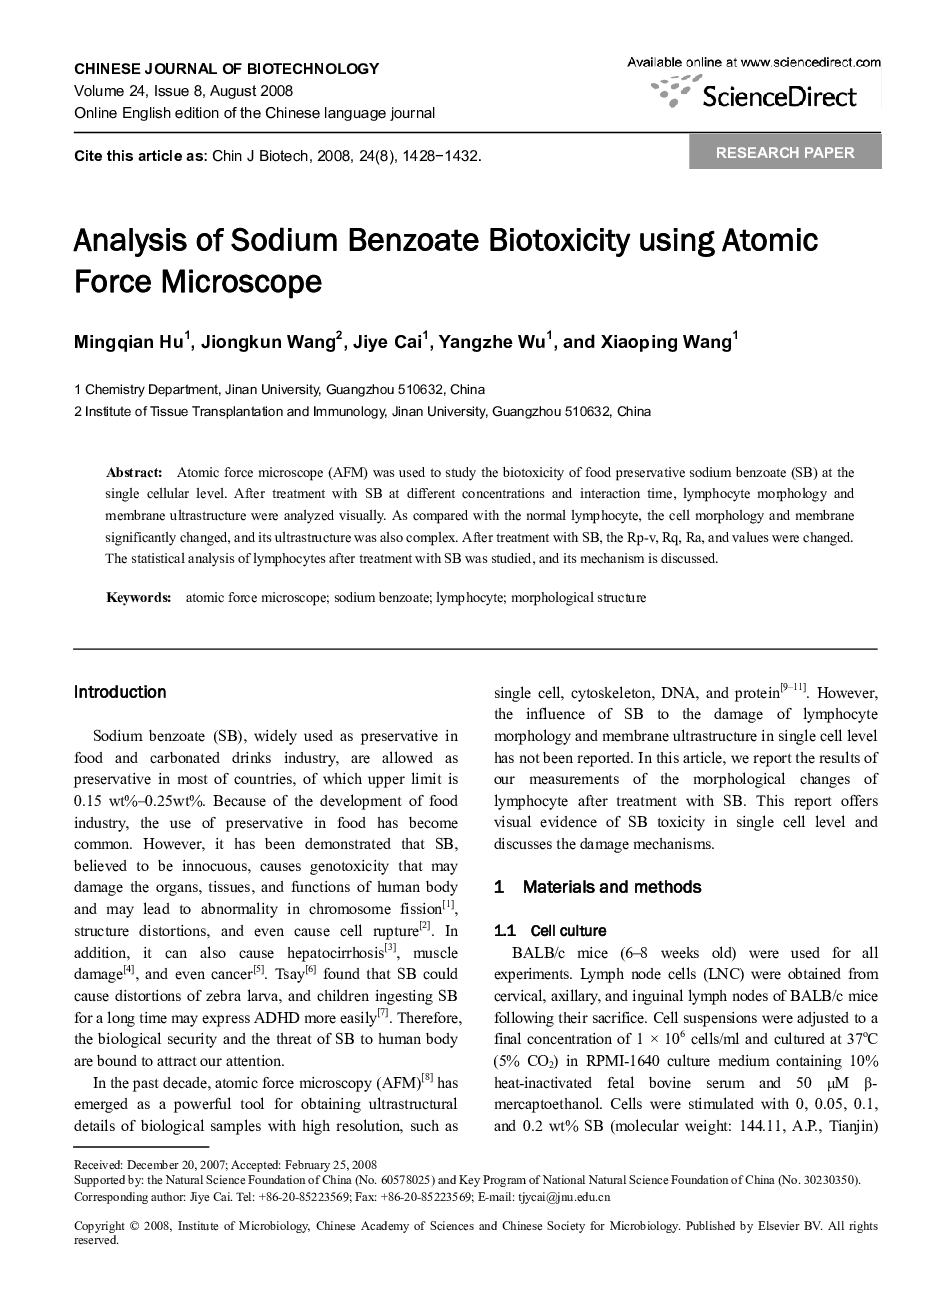 Analysis of Sodium Benzoate Biotoxicity using Atomic Force Microscope